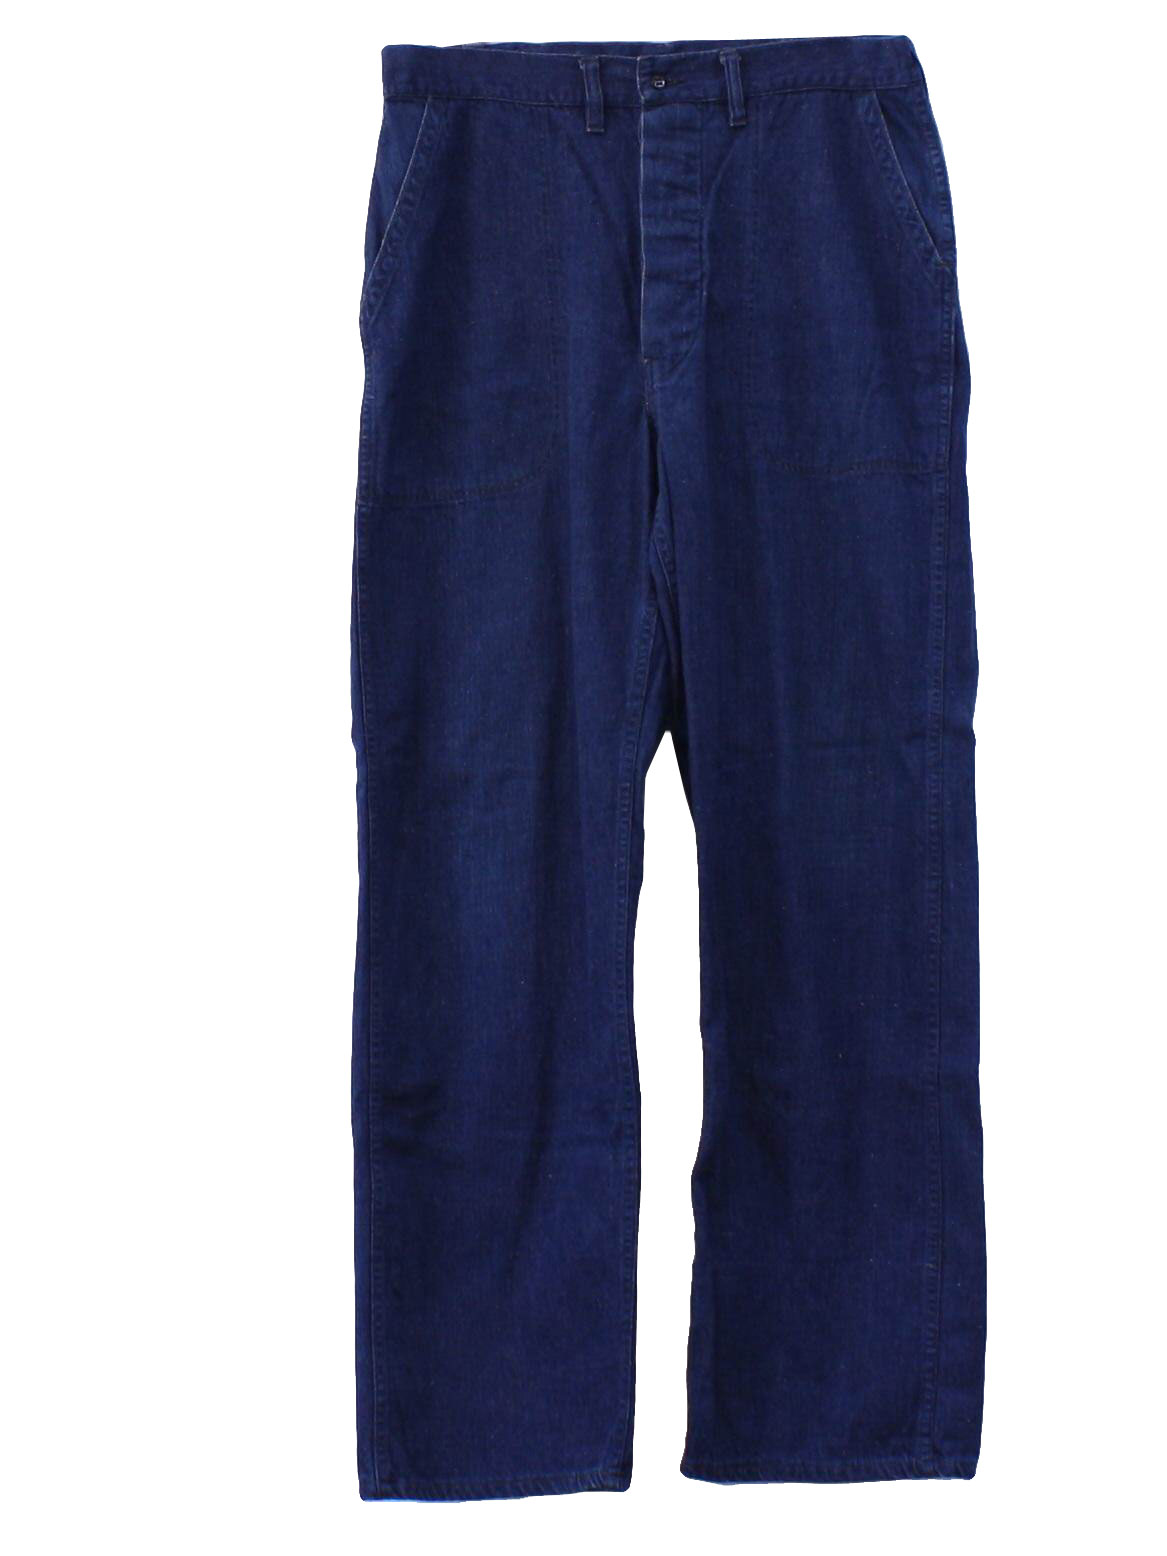 1970's Retro Bellbottom Pants: 70s -No Label- Mens faded blue cotton ...